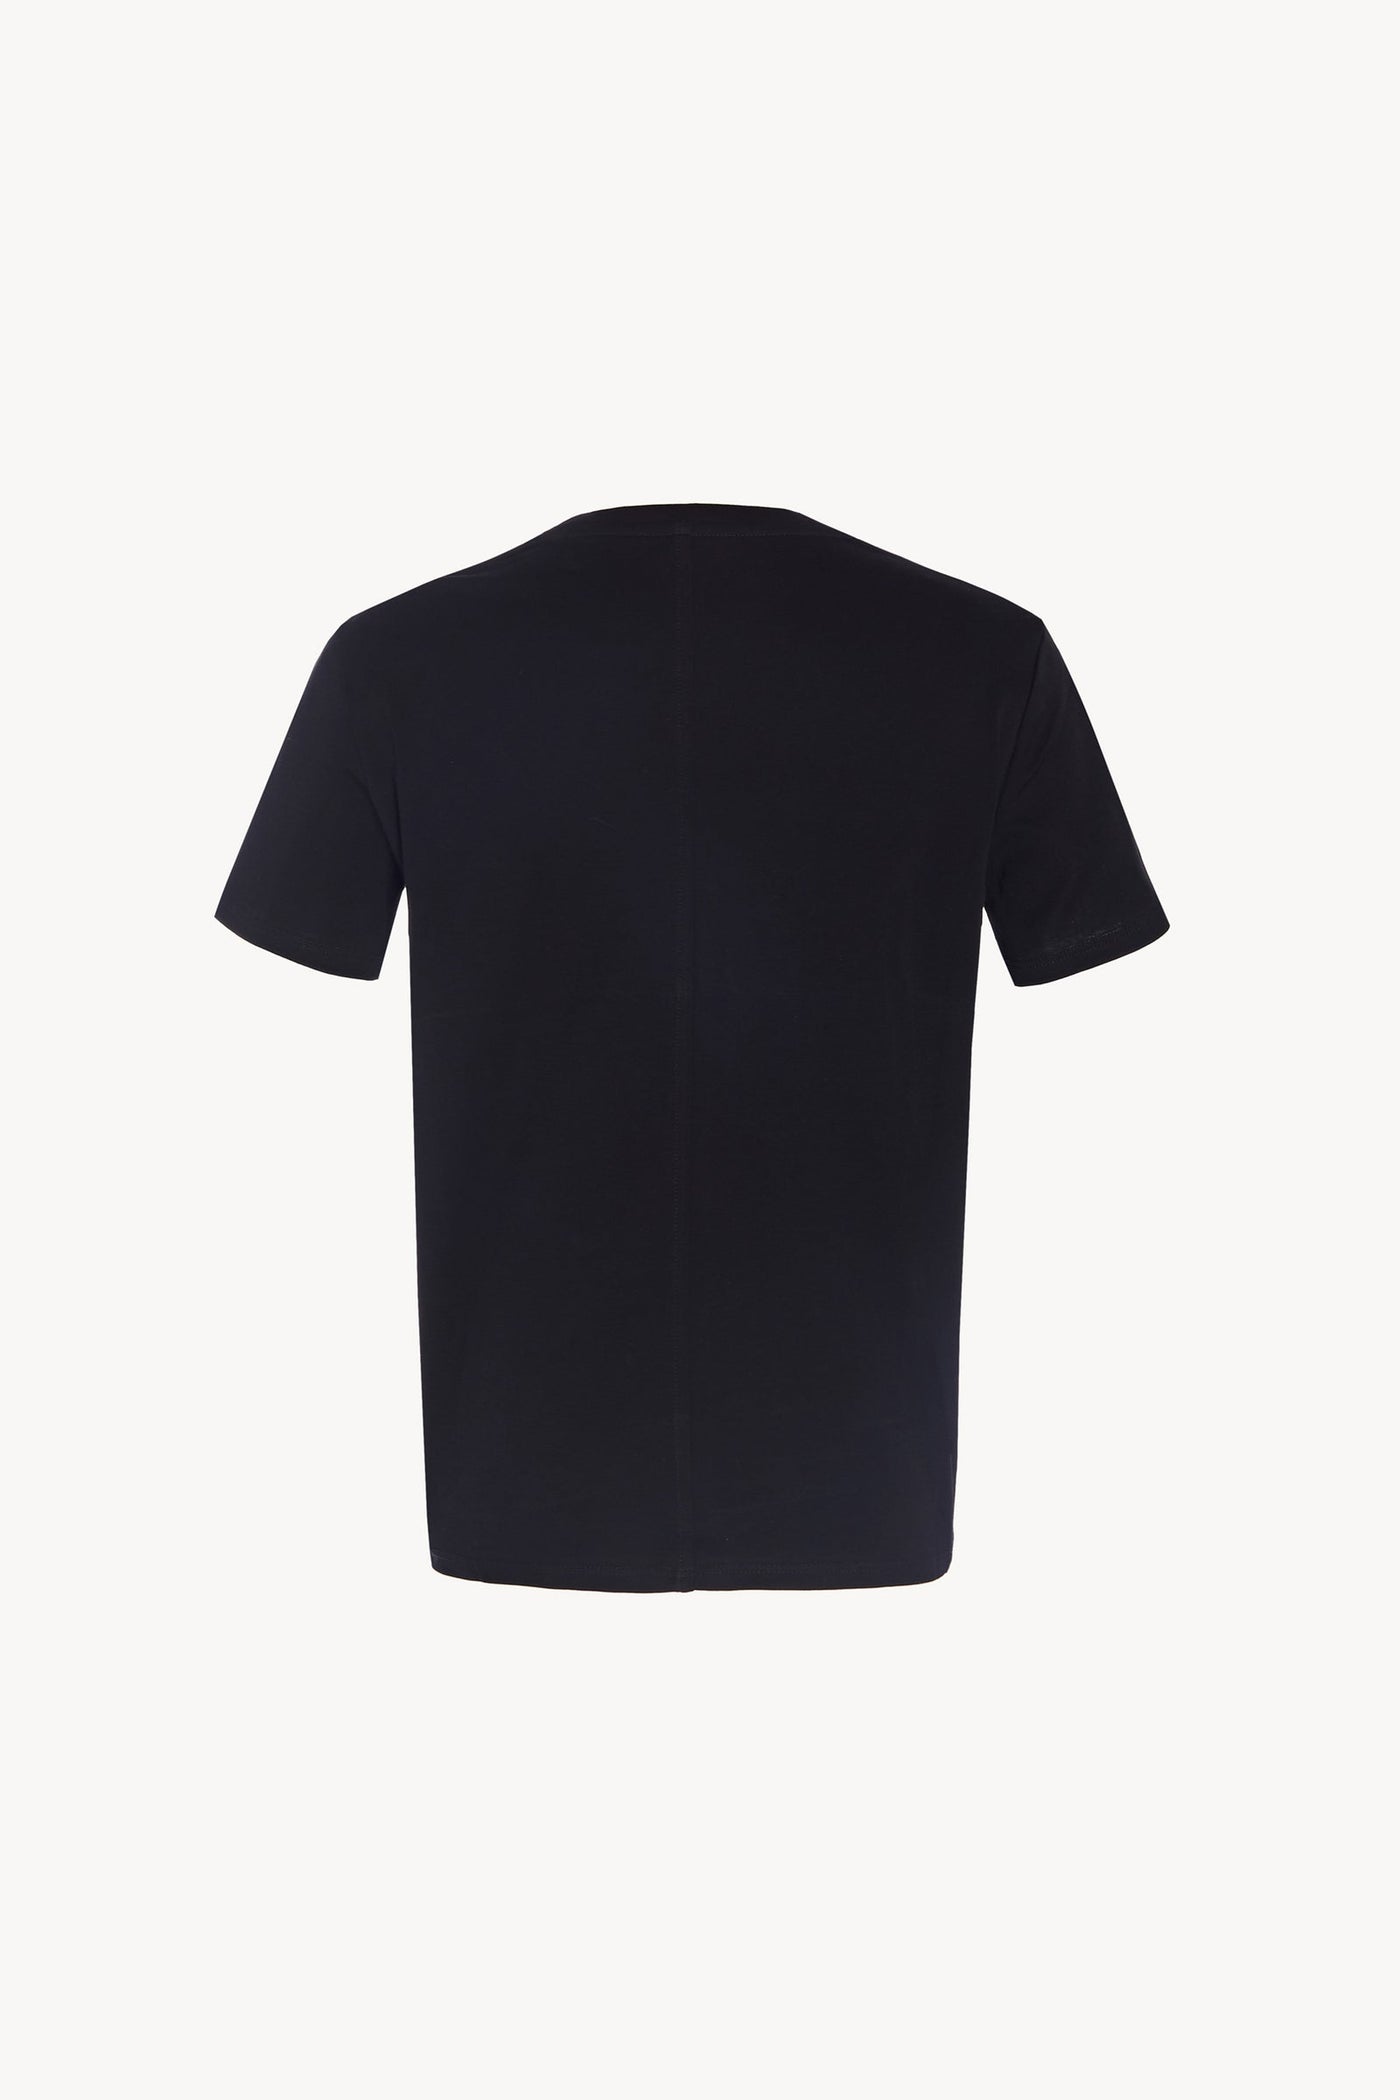 the-row-wesler-t-shirt-black-amarees